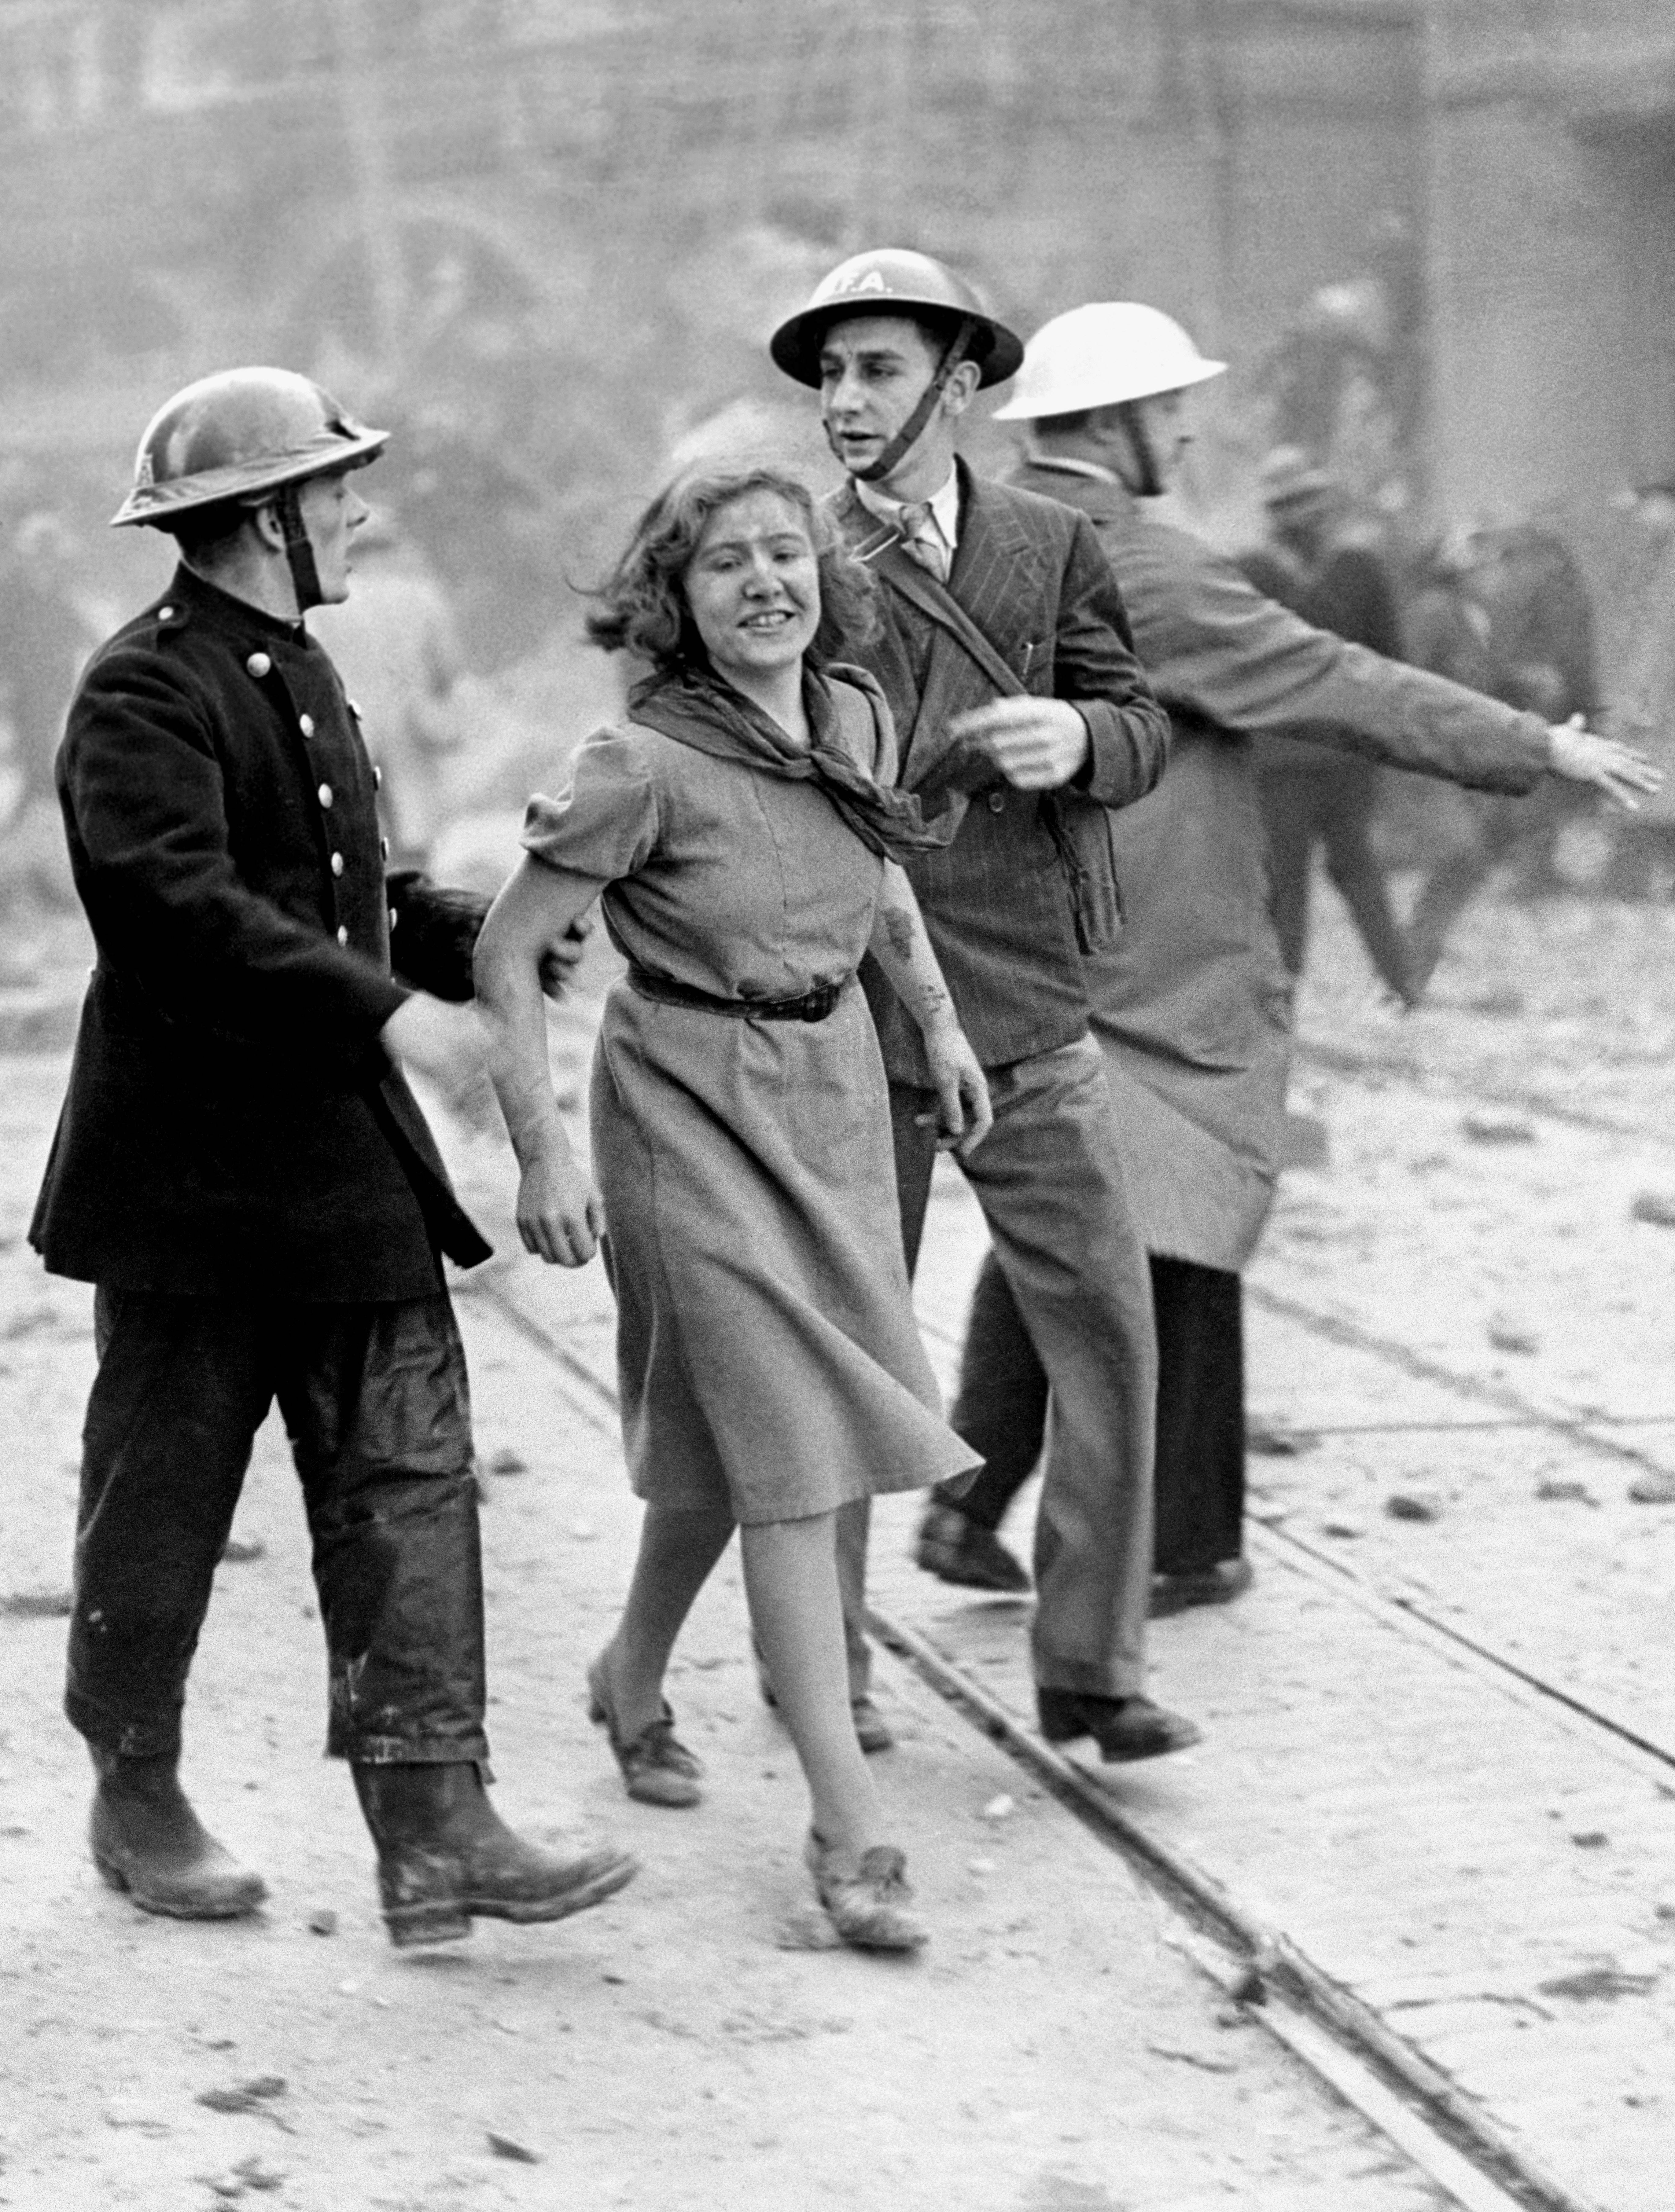 Female Involvement During World War II